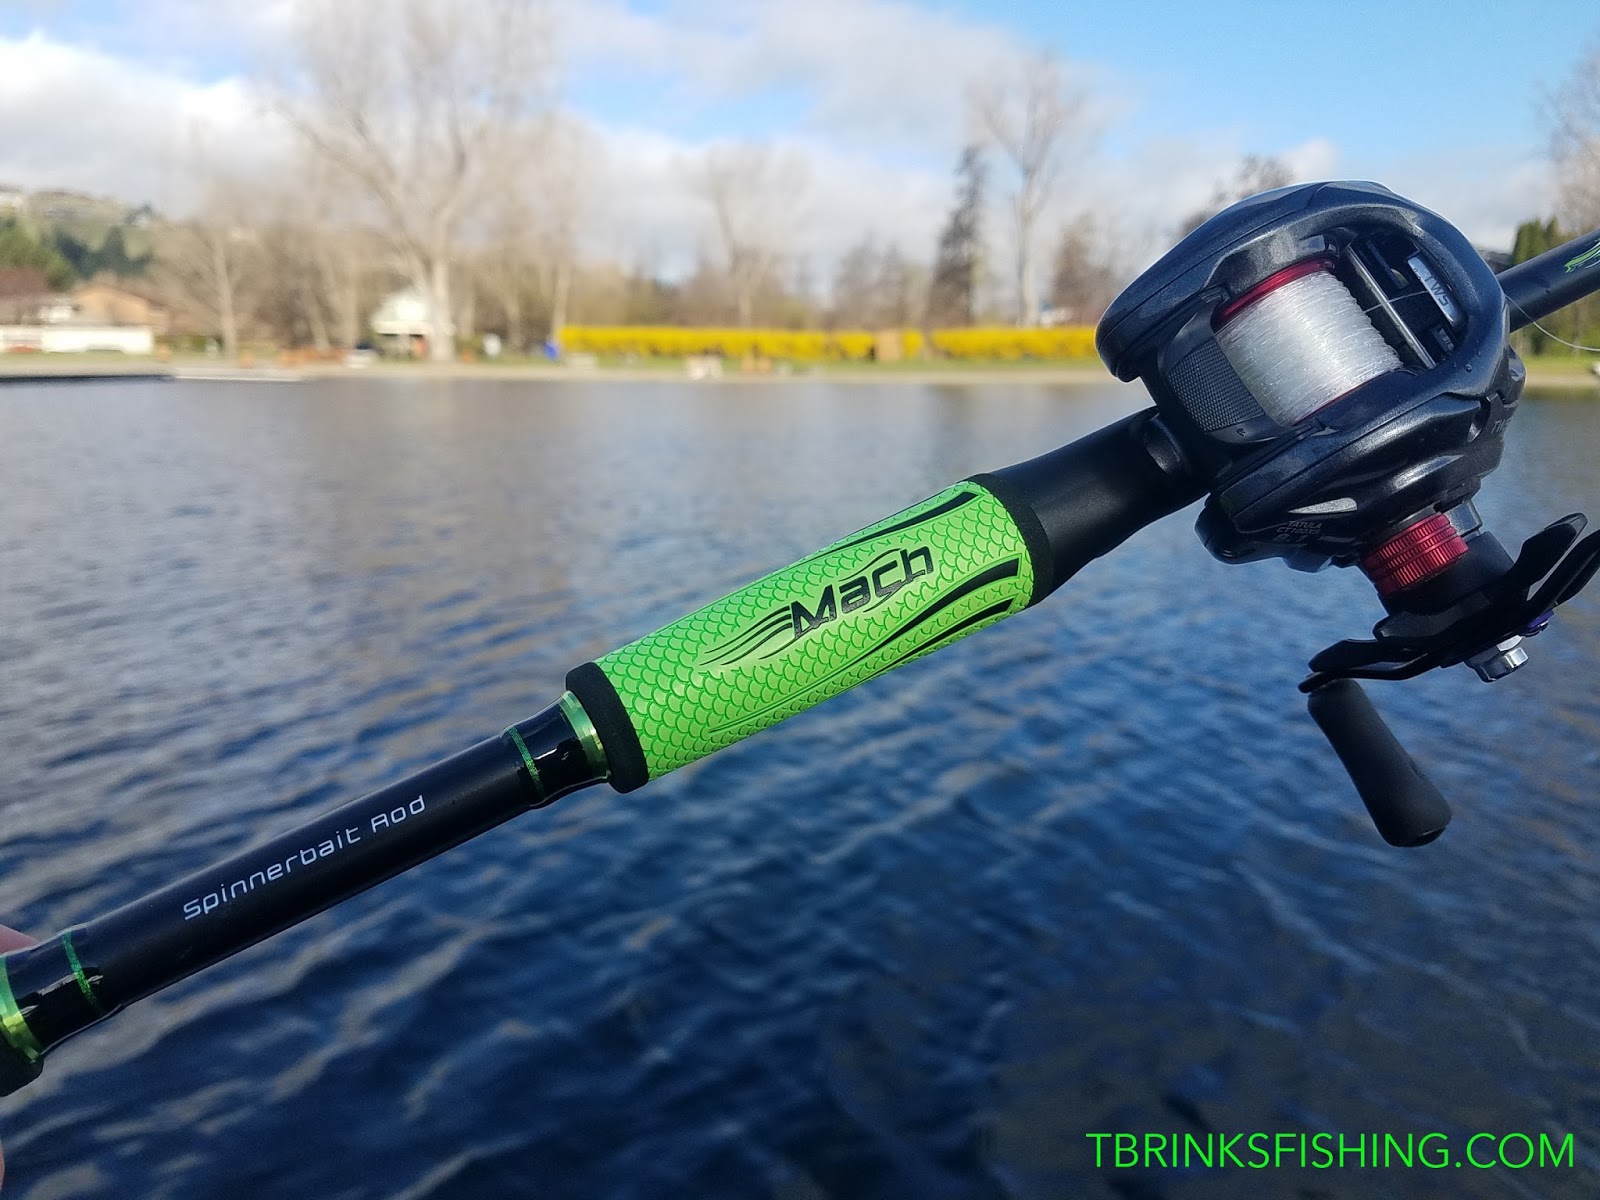 T Brinks Fishing: Lew's Mach Speed Stick Rod Review